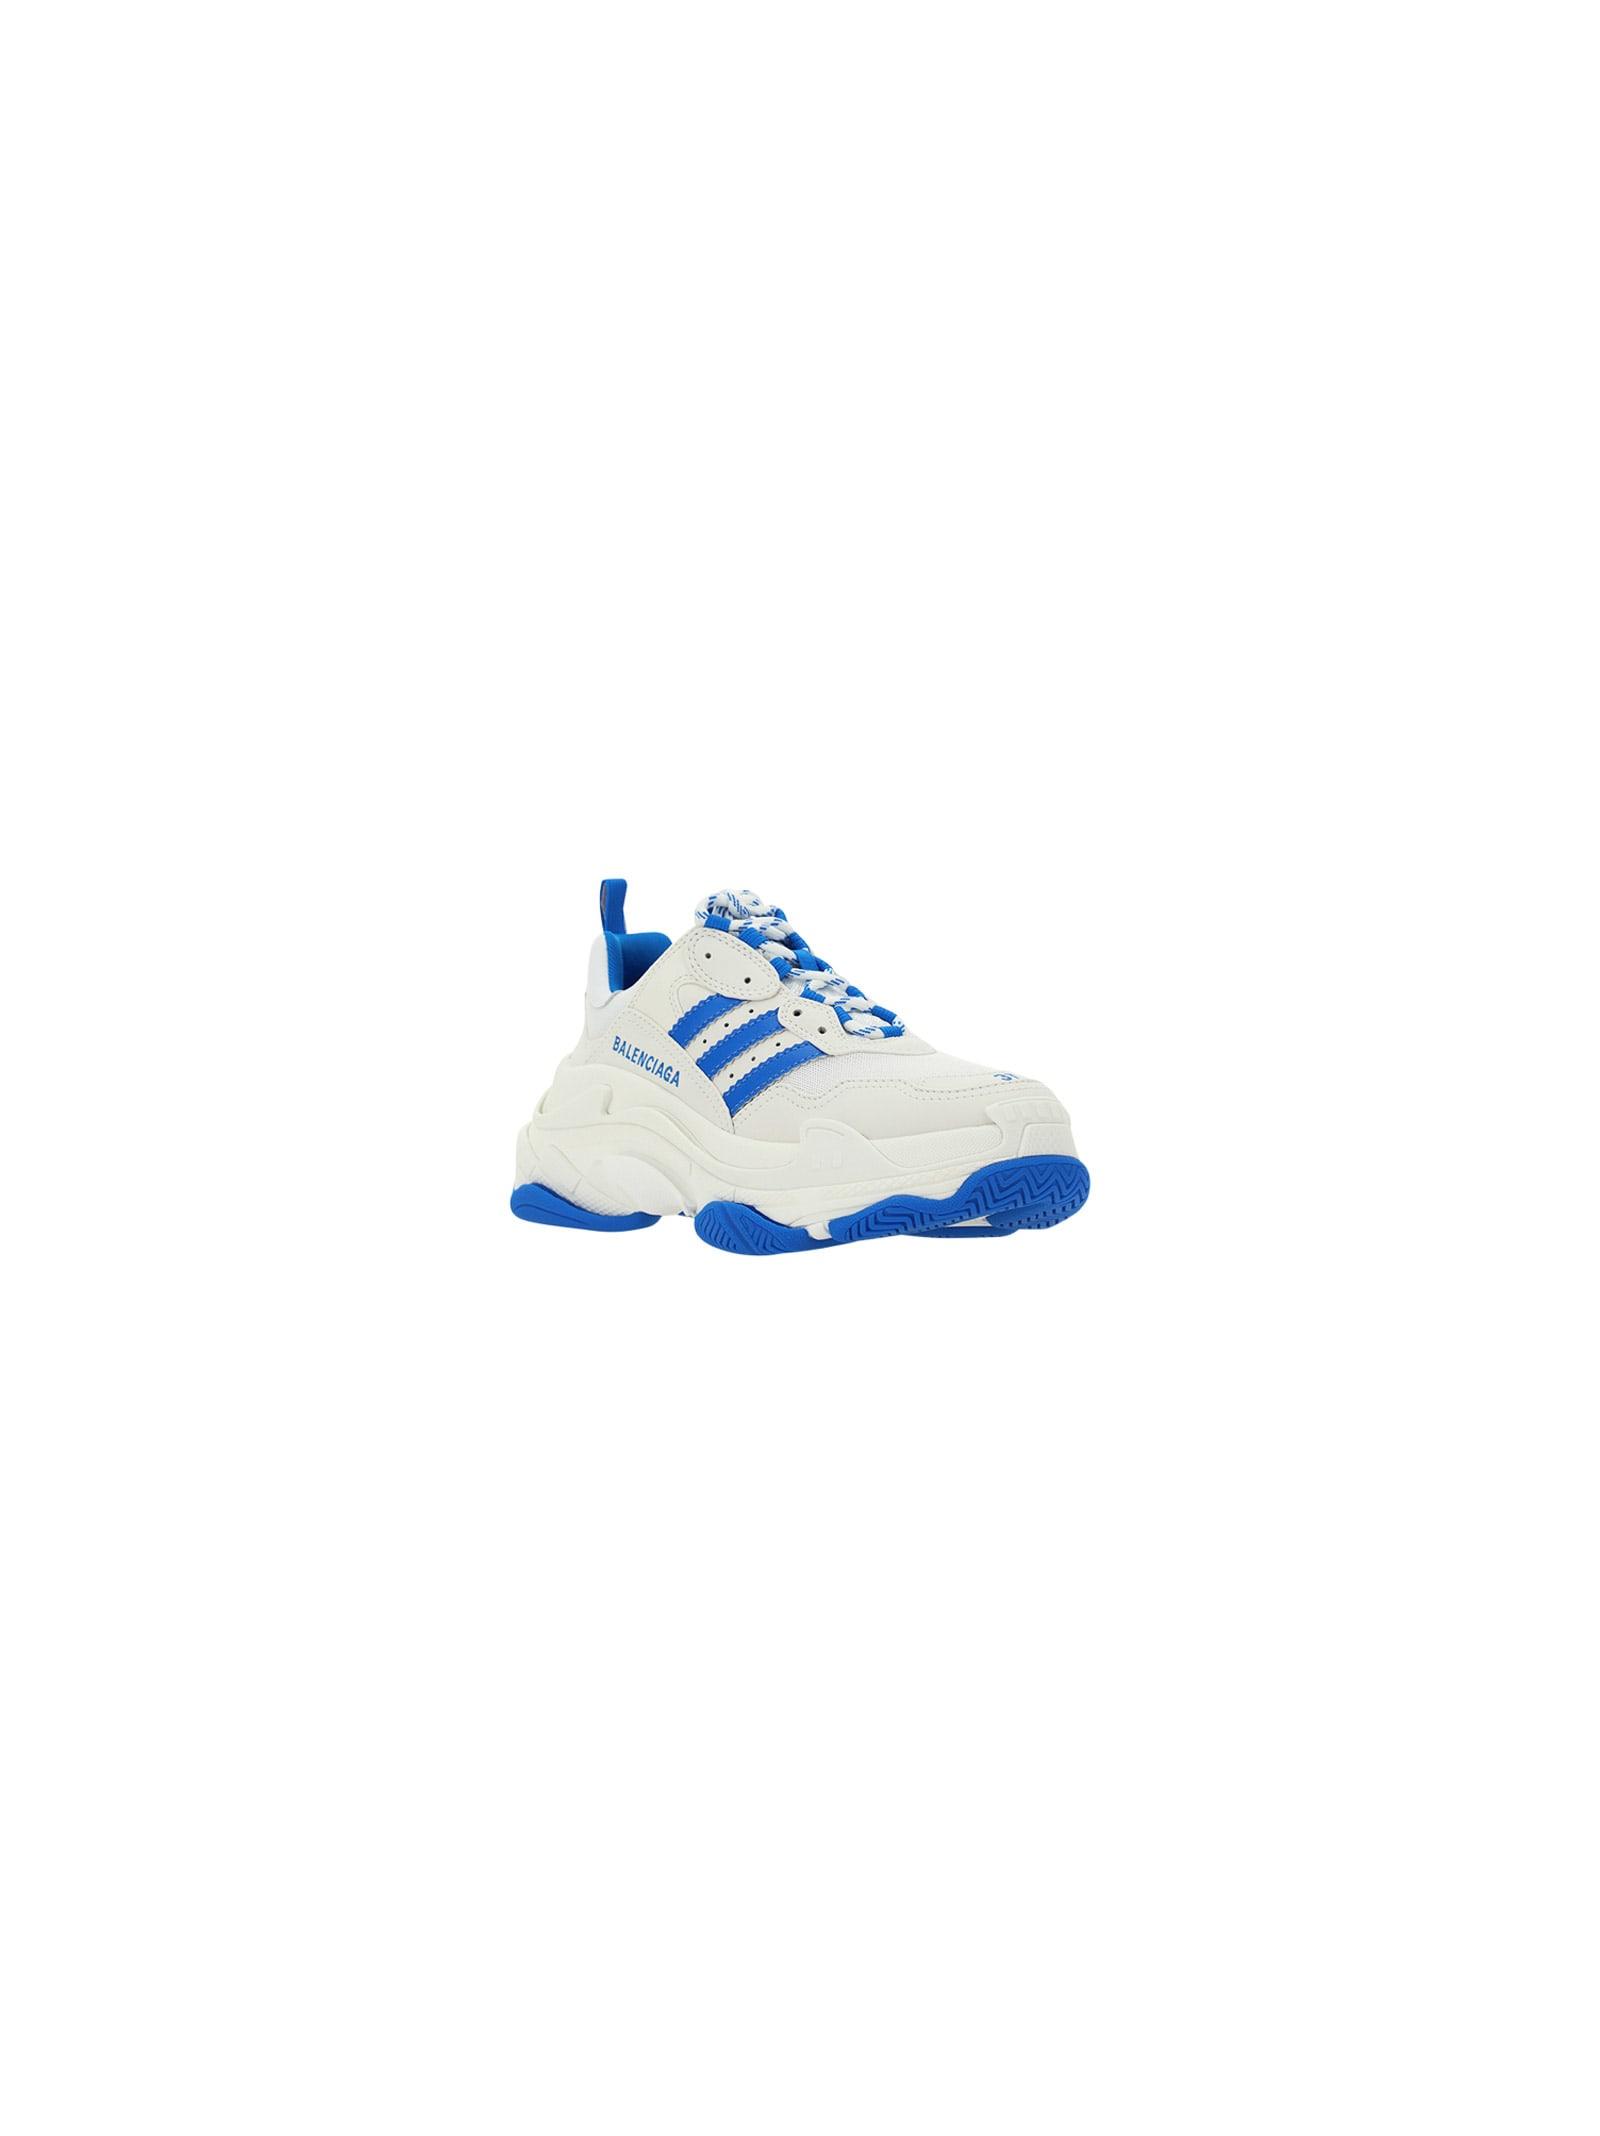 Balenciaga X Adidas Triple S Sneakers in Blue | Lyst